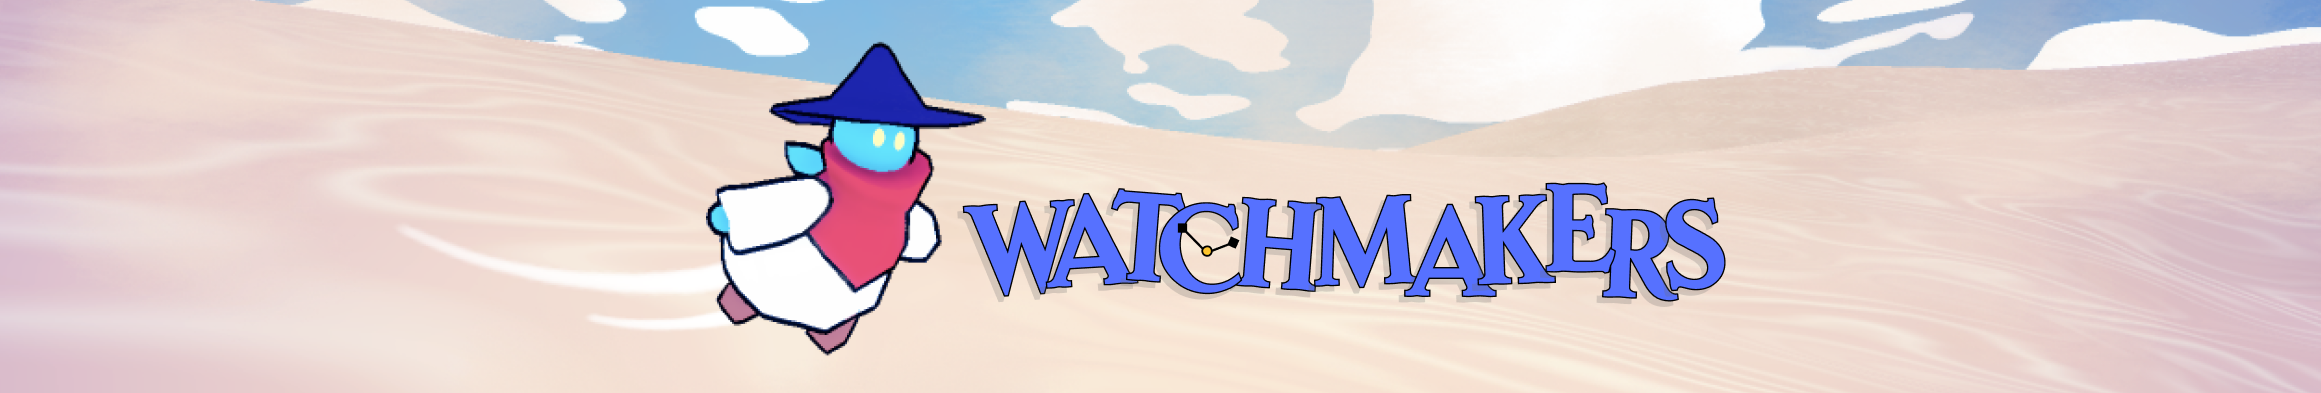 Watchmakers logo